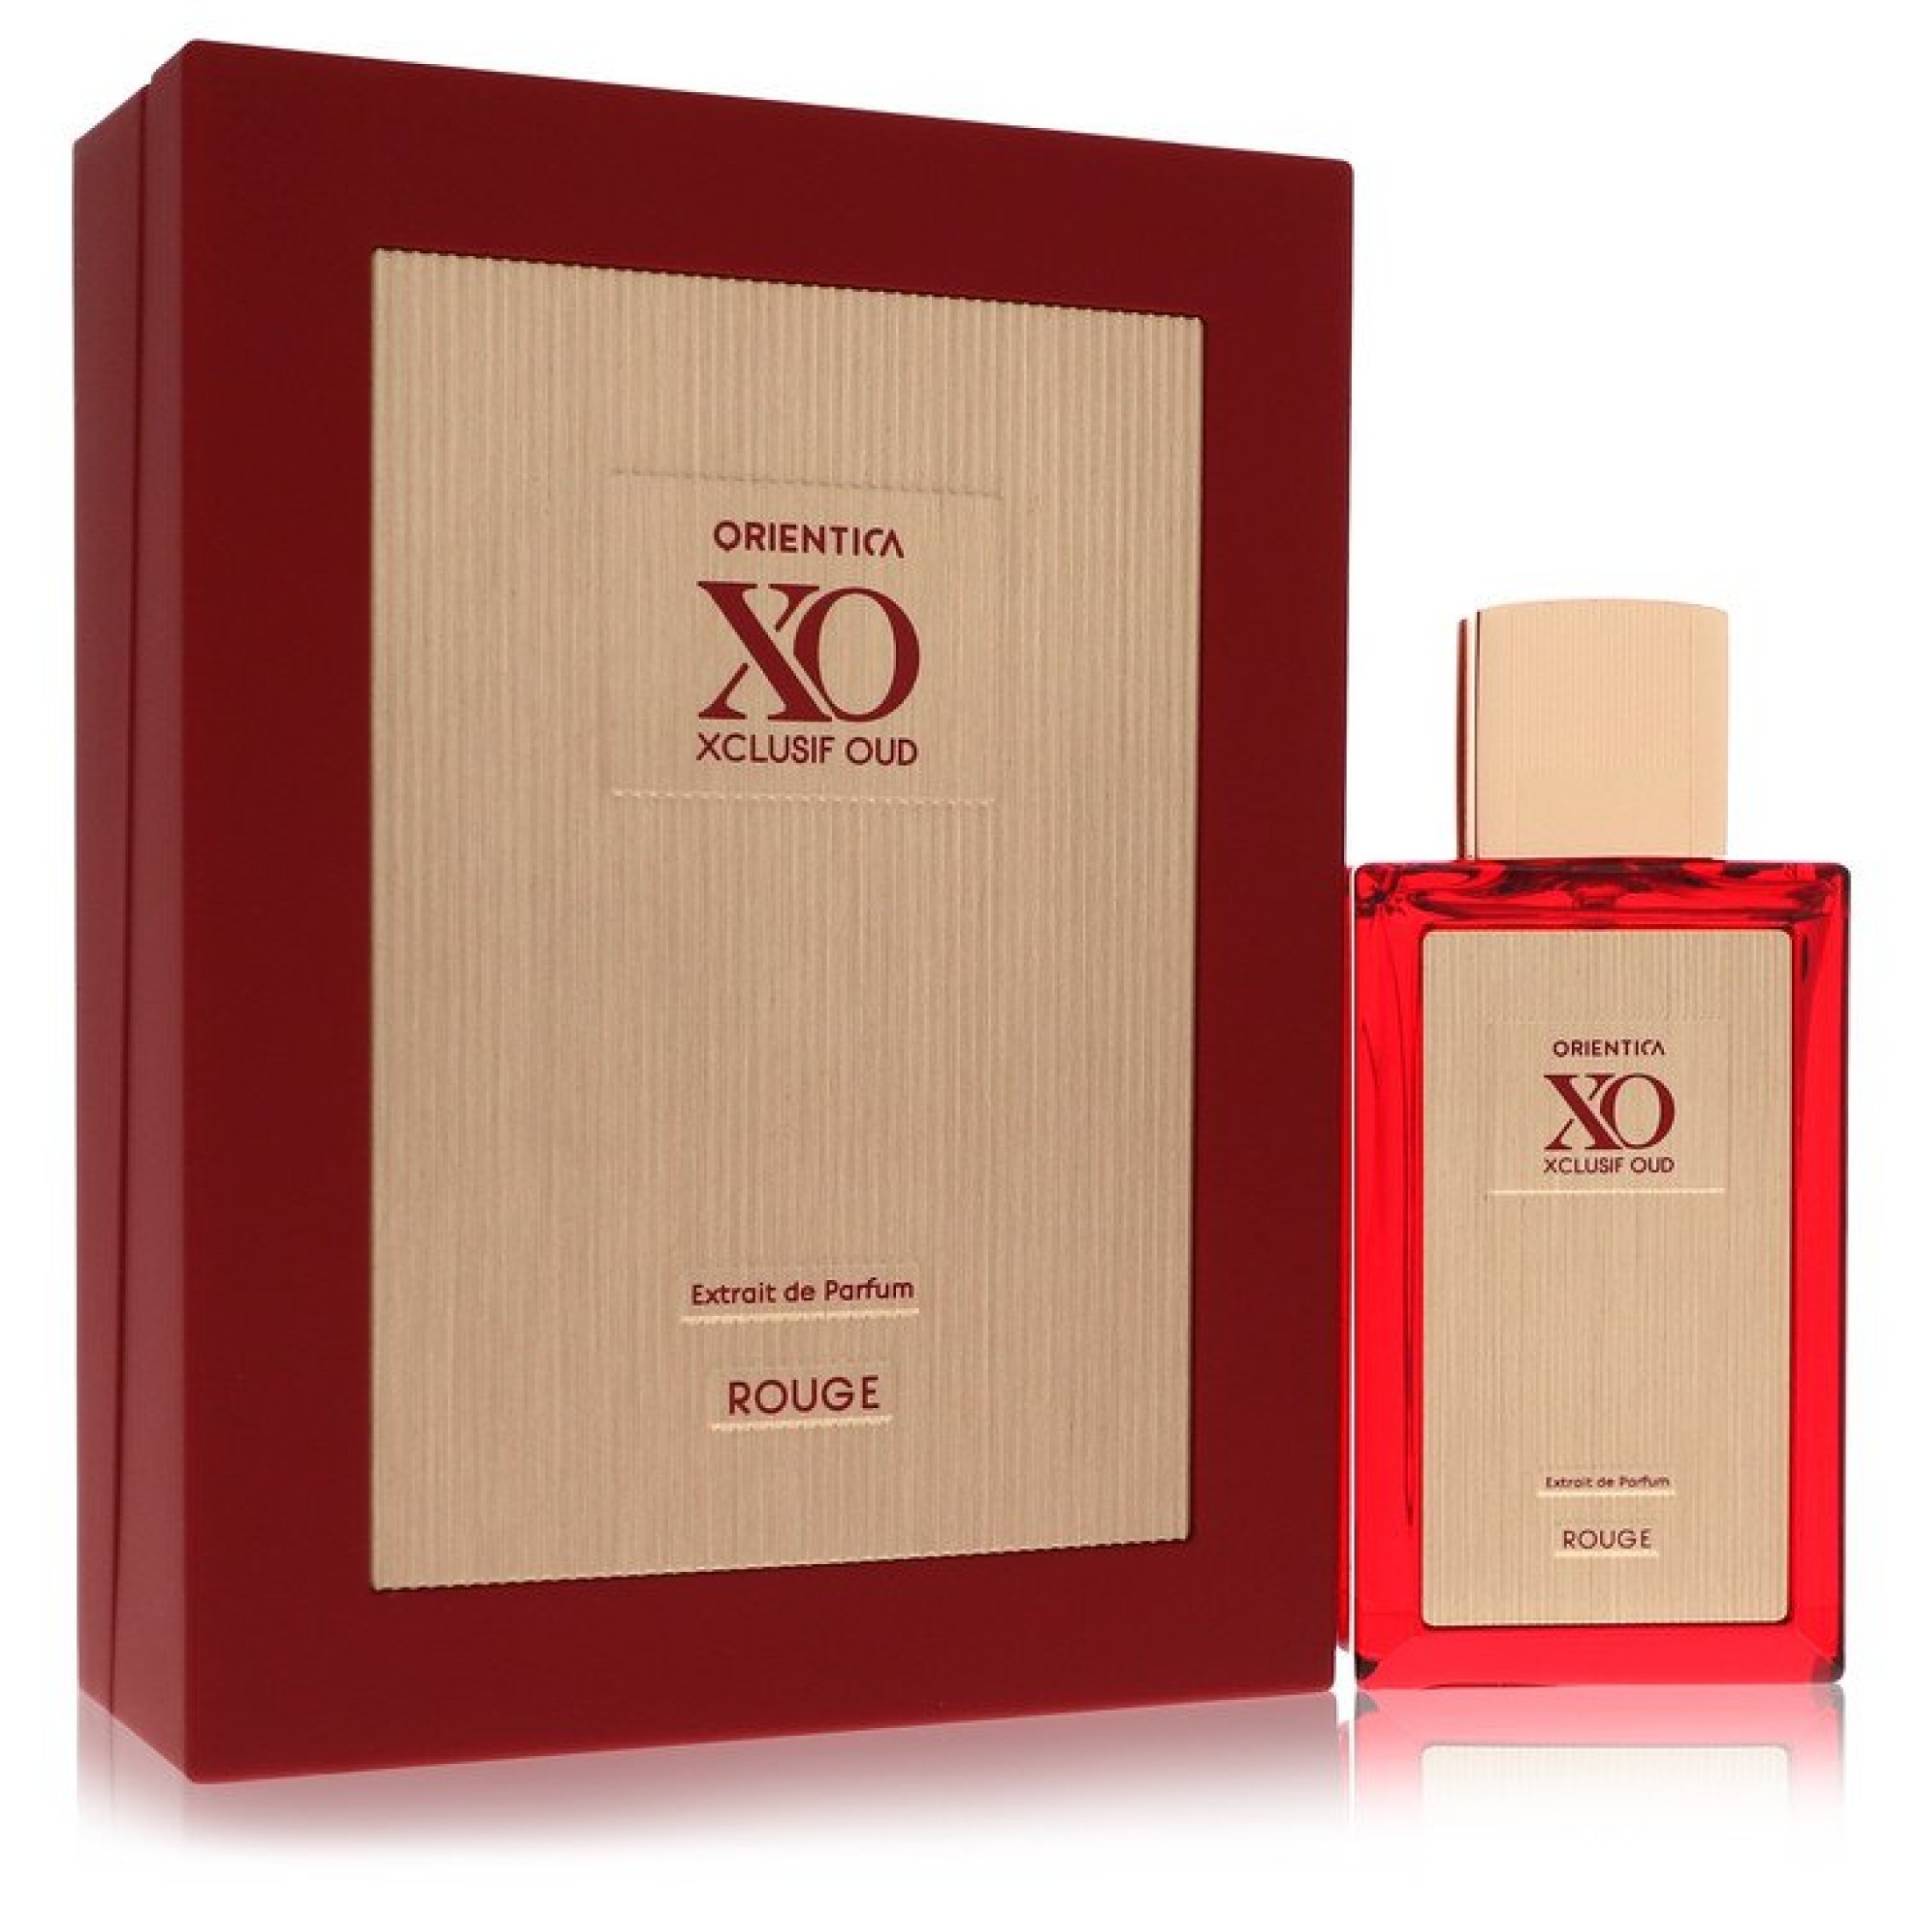 Orientica XO Xclusif Oud Rouge Extrait De Parfum (Unisex) 60 ml von Orientica